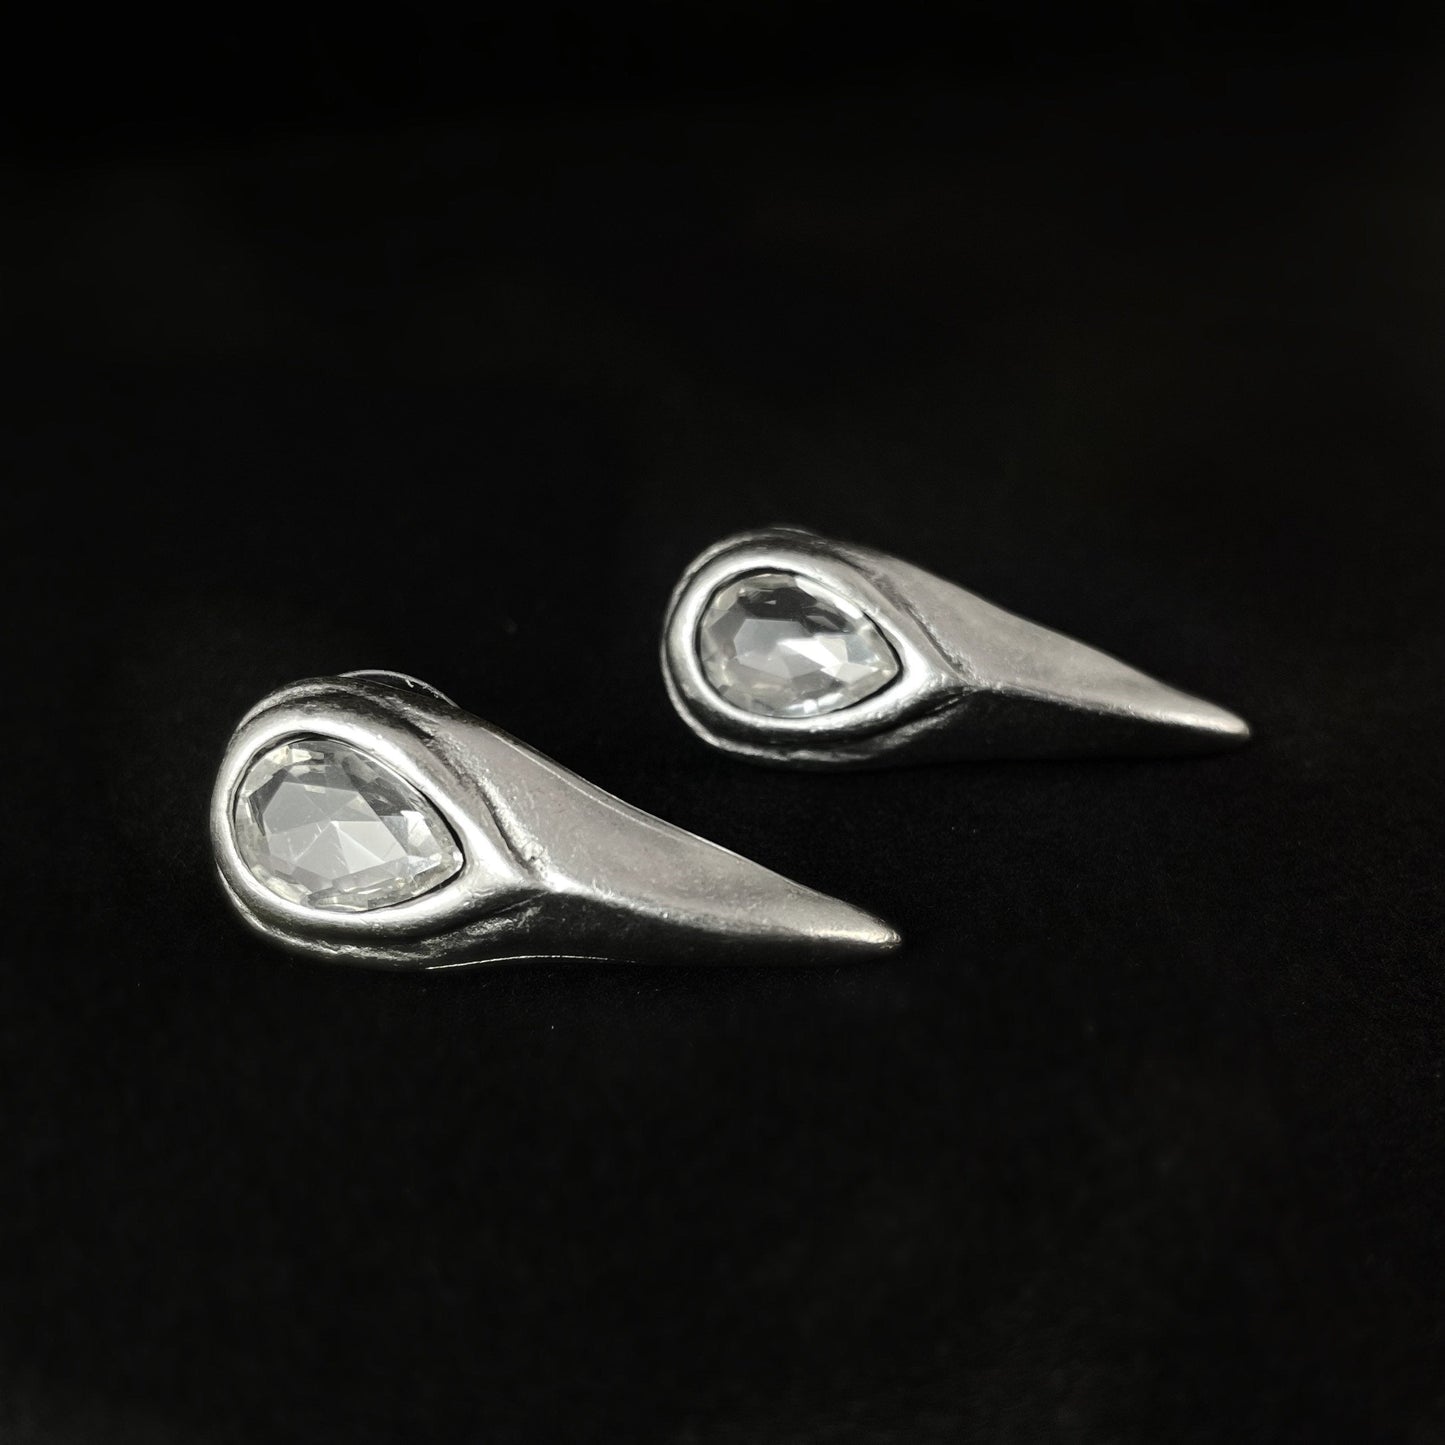 Handmade Silver Earrings with Crystals, Nickel Free